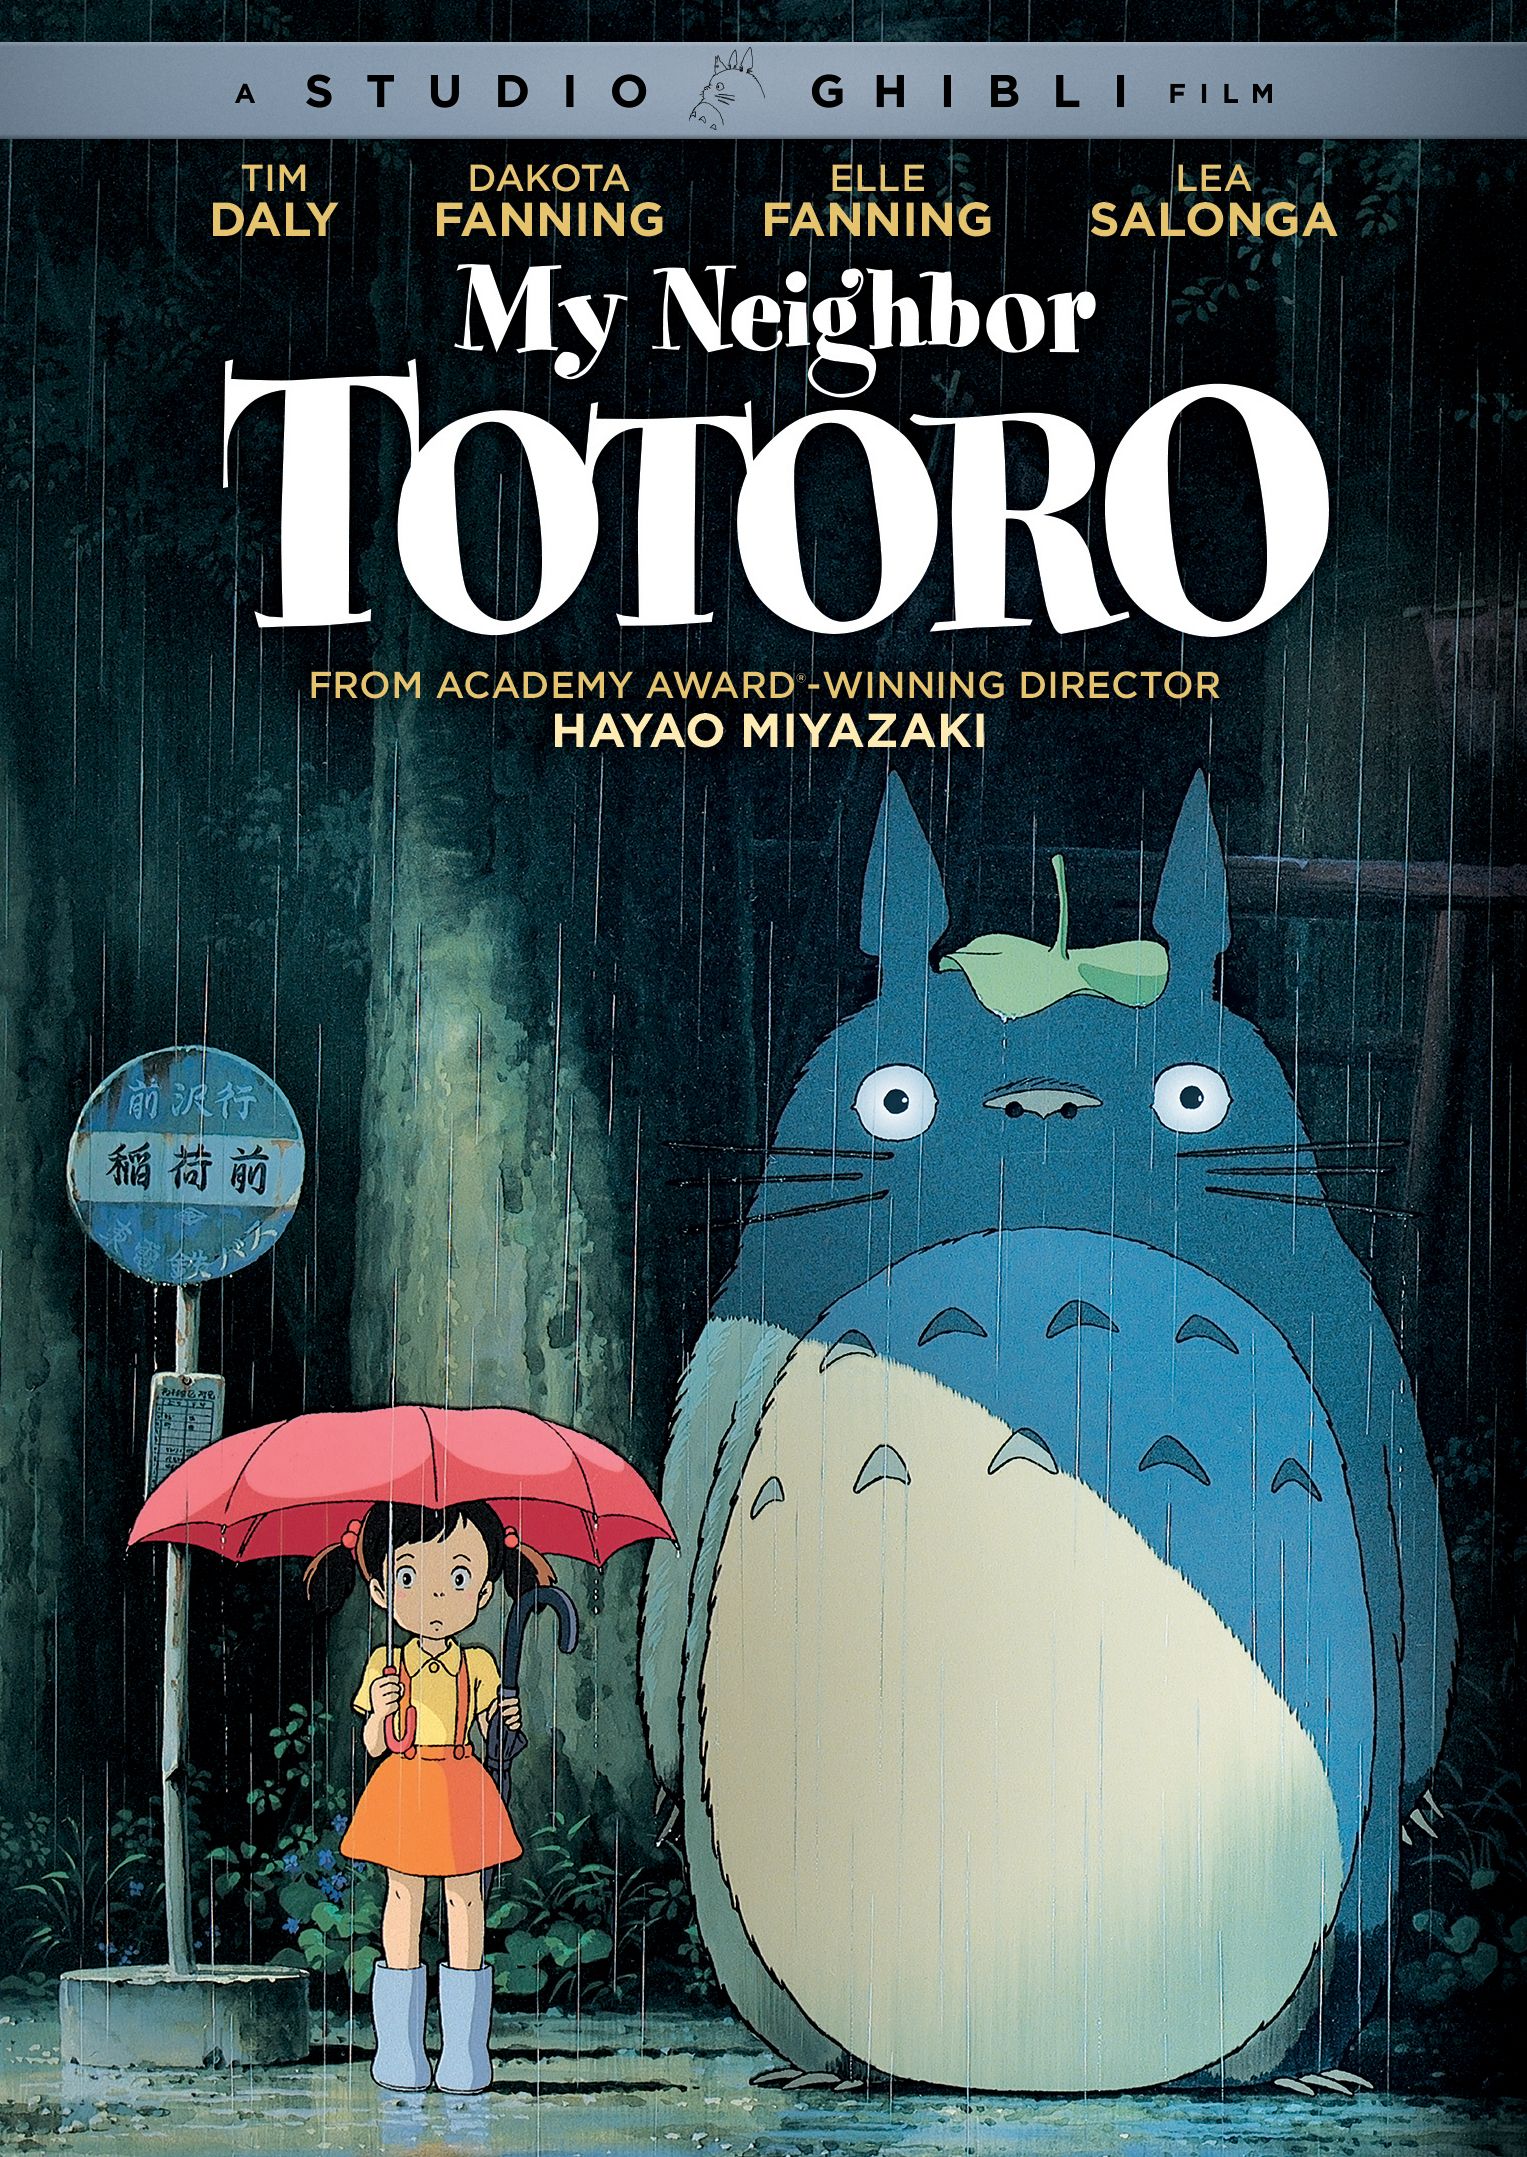 Satsuki and Totoro at the bus stop in the rain in Studio Ghibli's My Neighbor Totoro